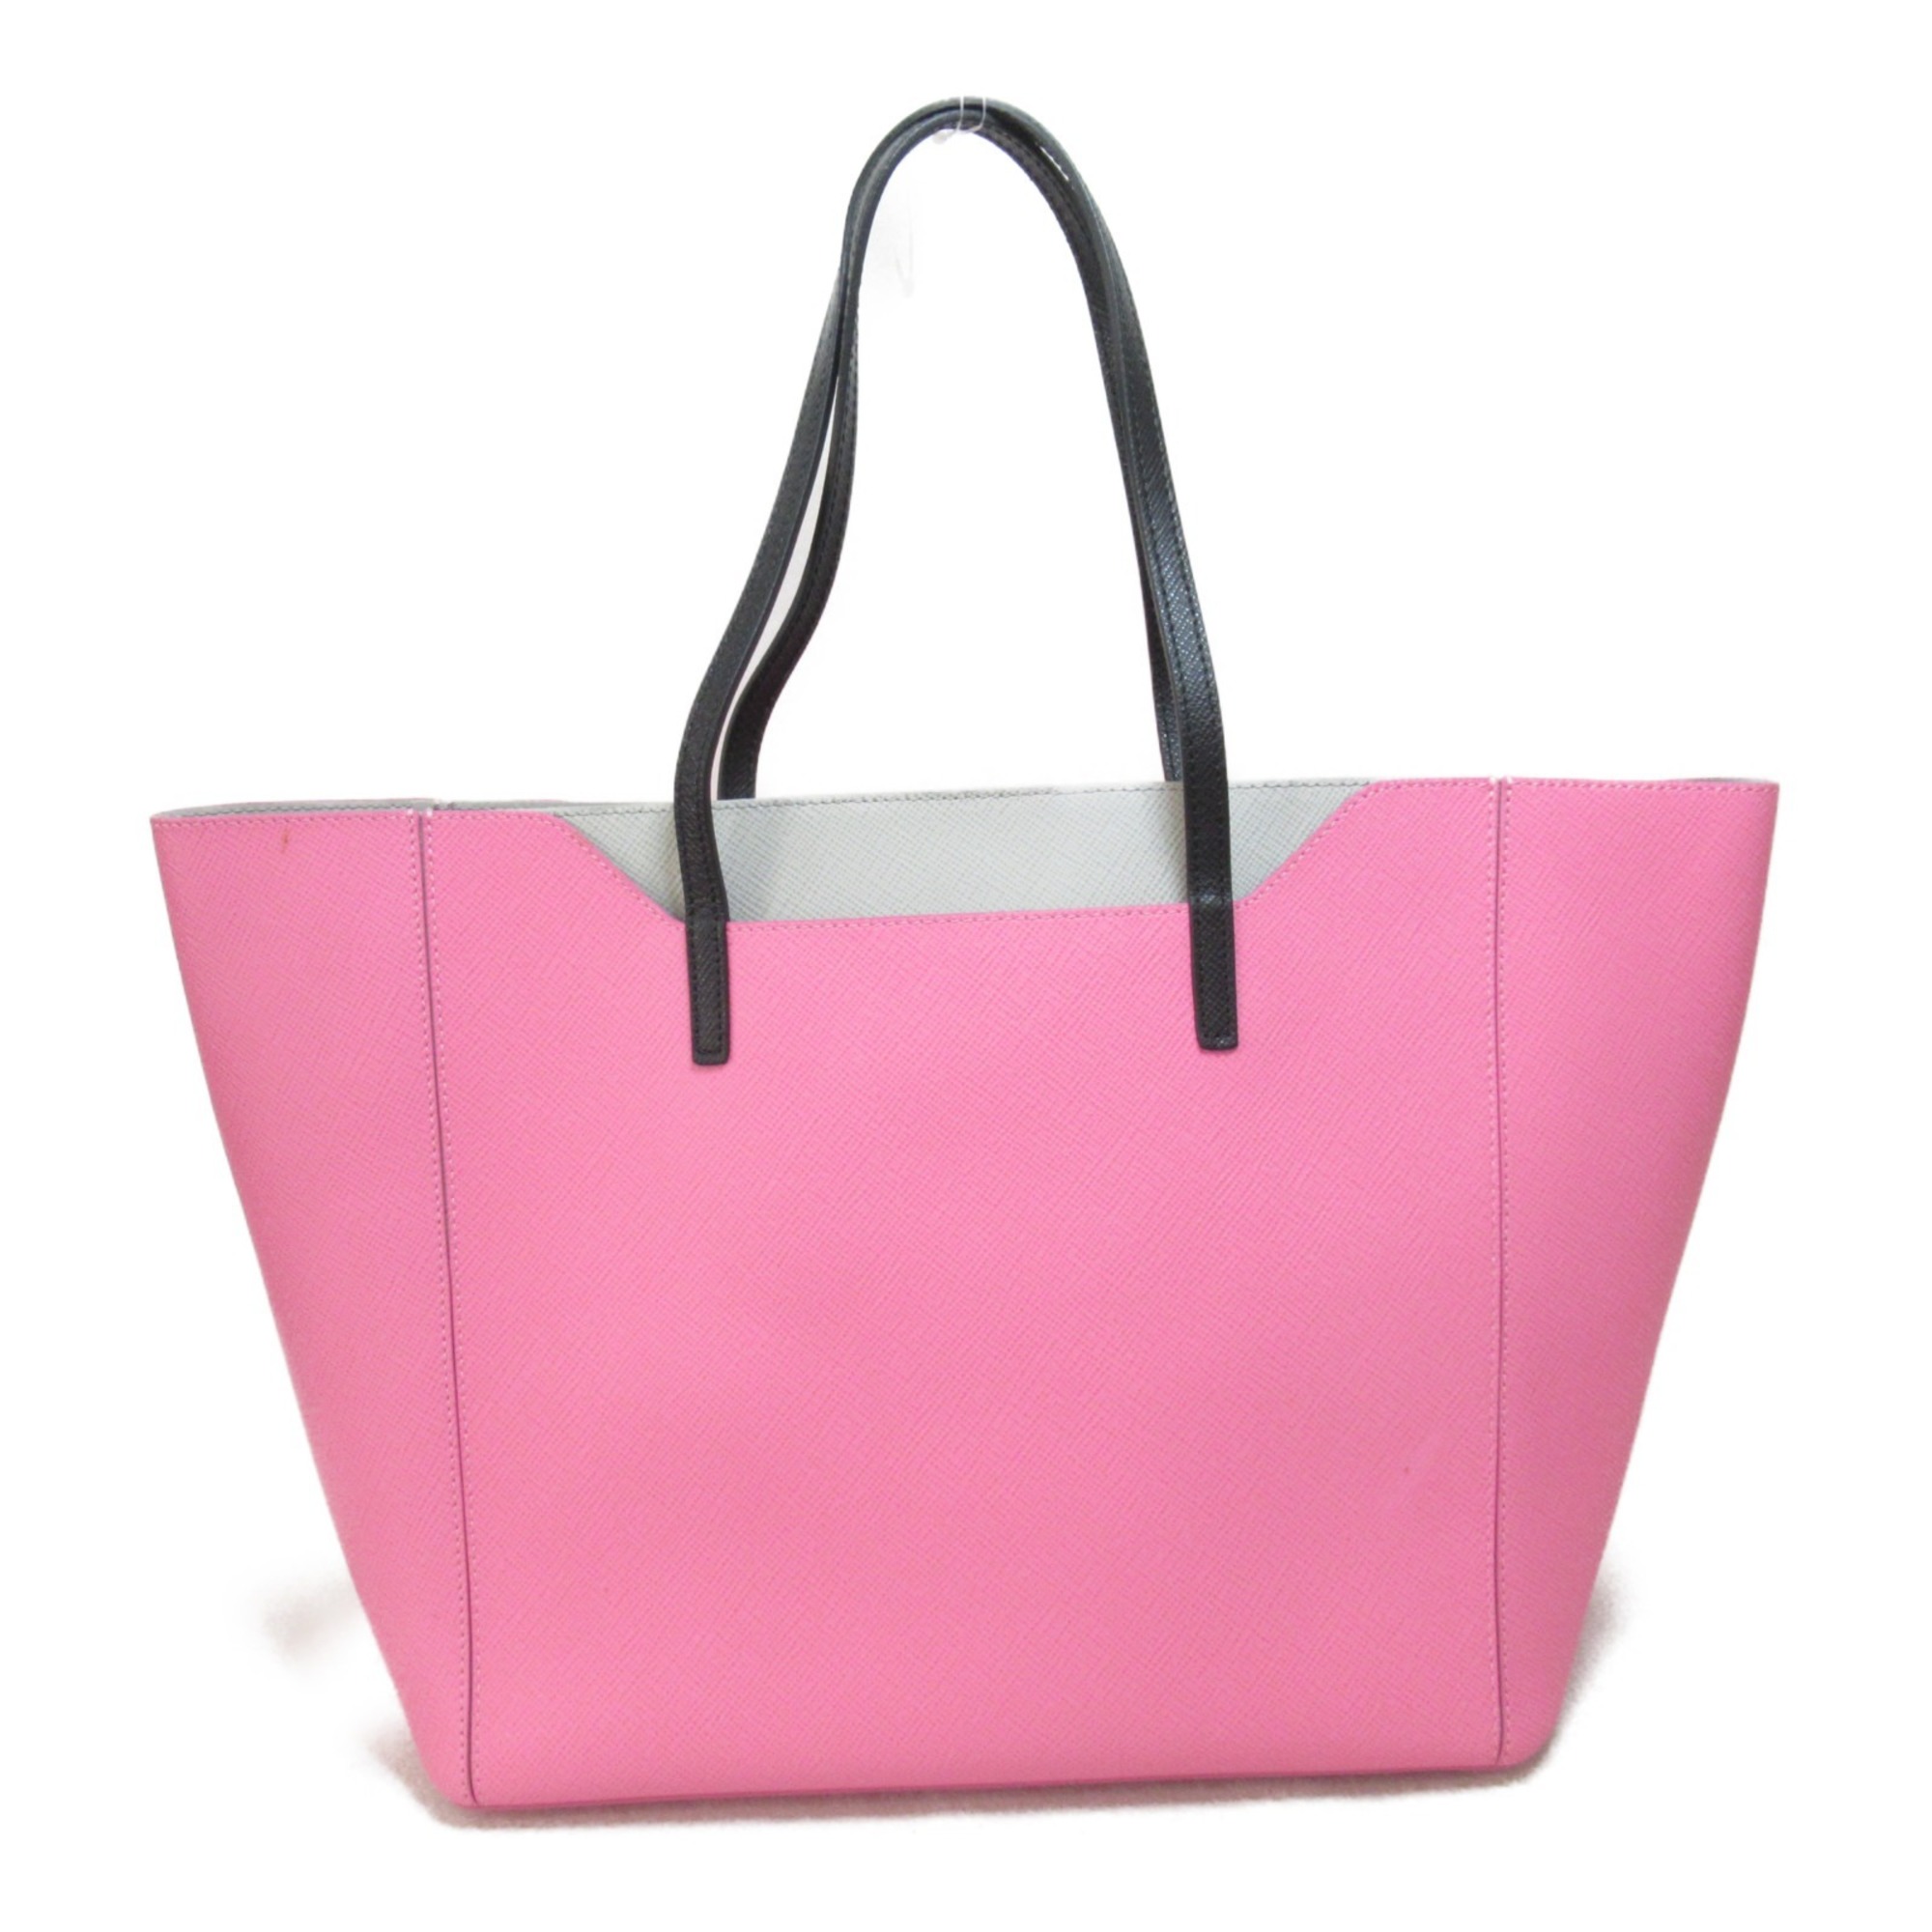 Furla Tote Bag Pink moonstone pink leather 793670